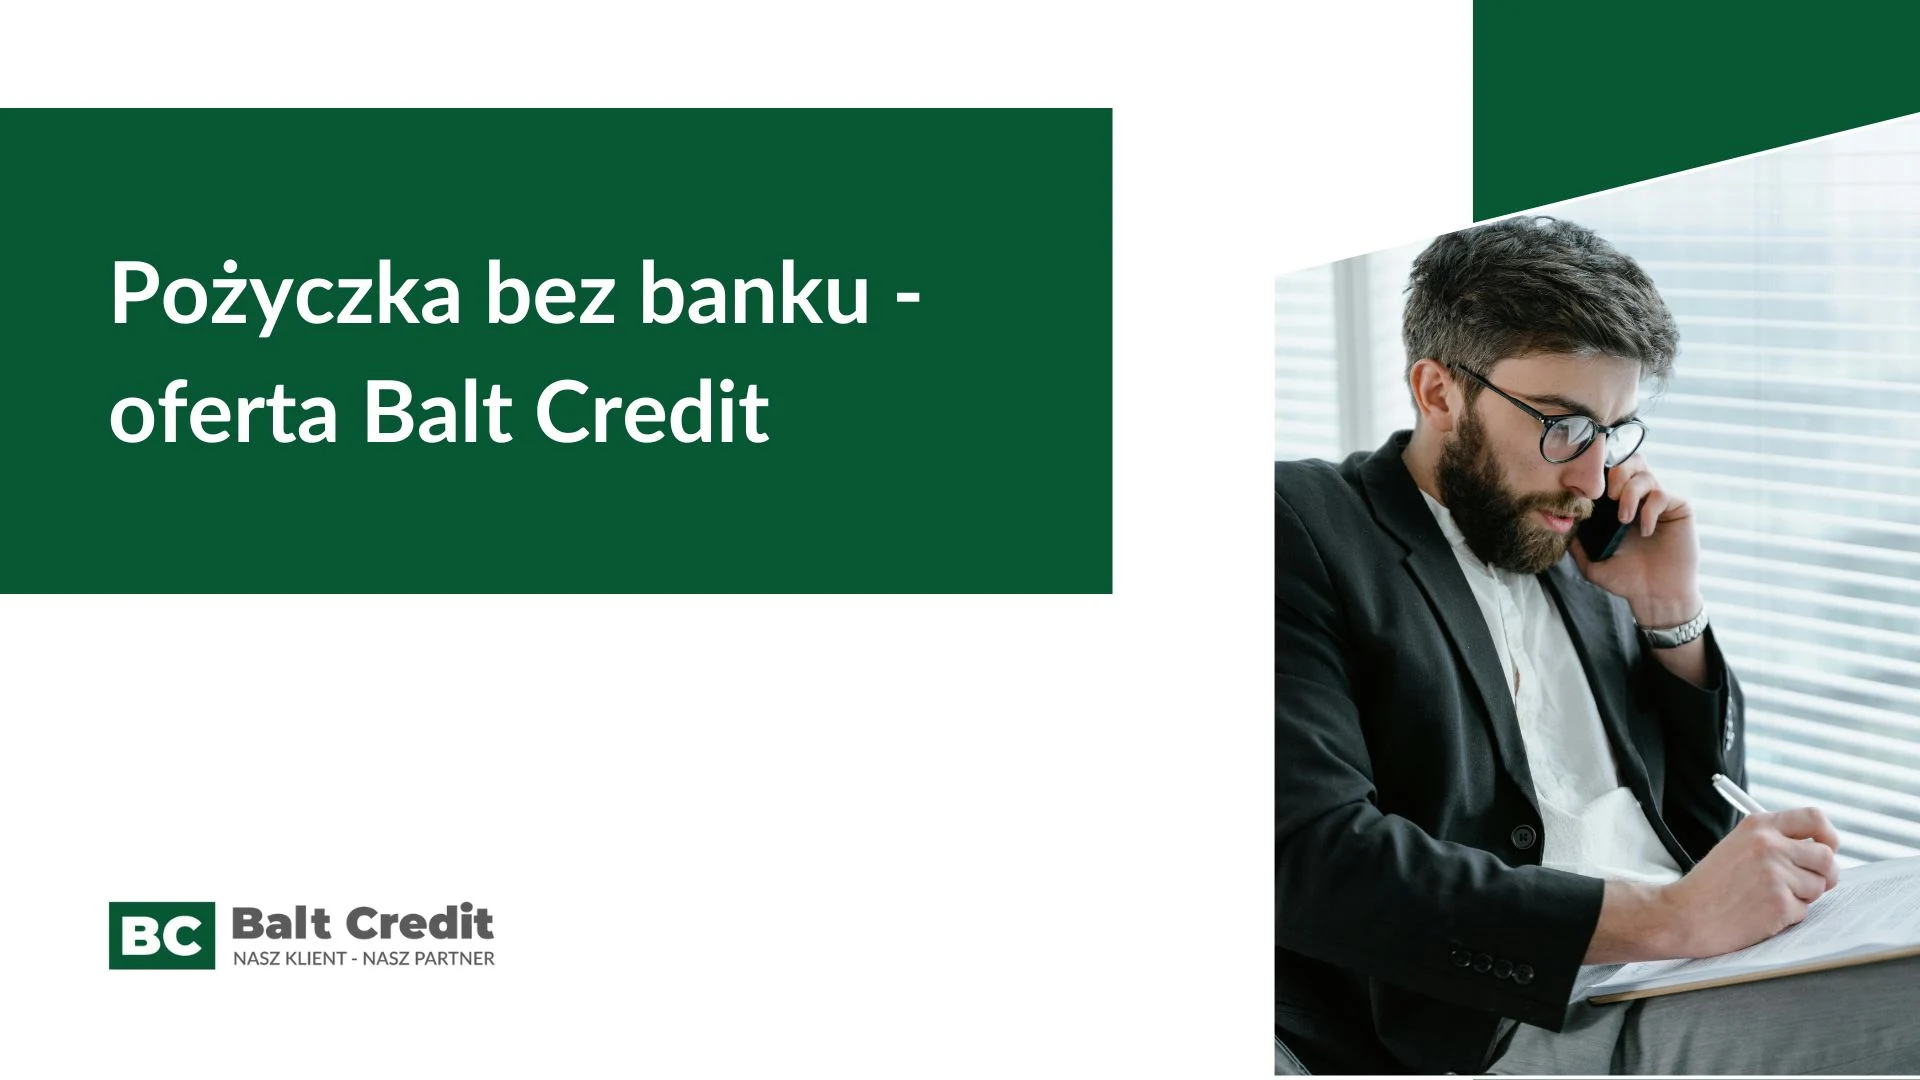 Pożyczka bez banku - oferta Balt Credit 